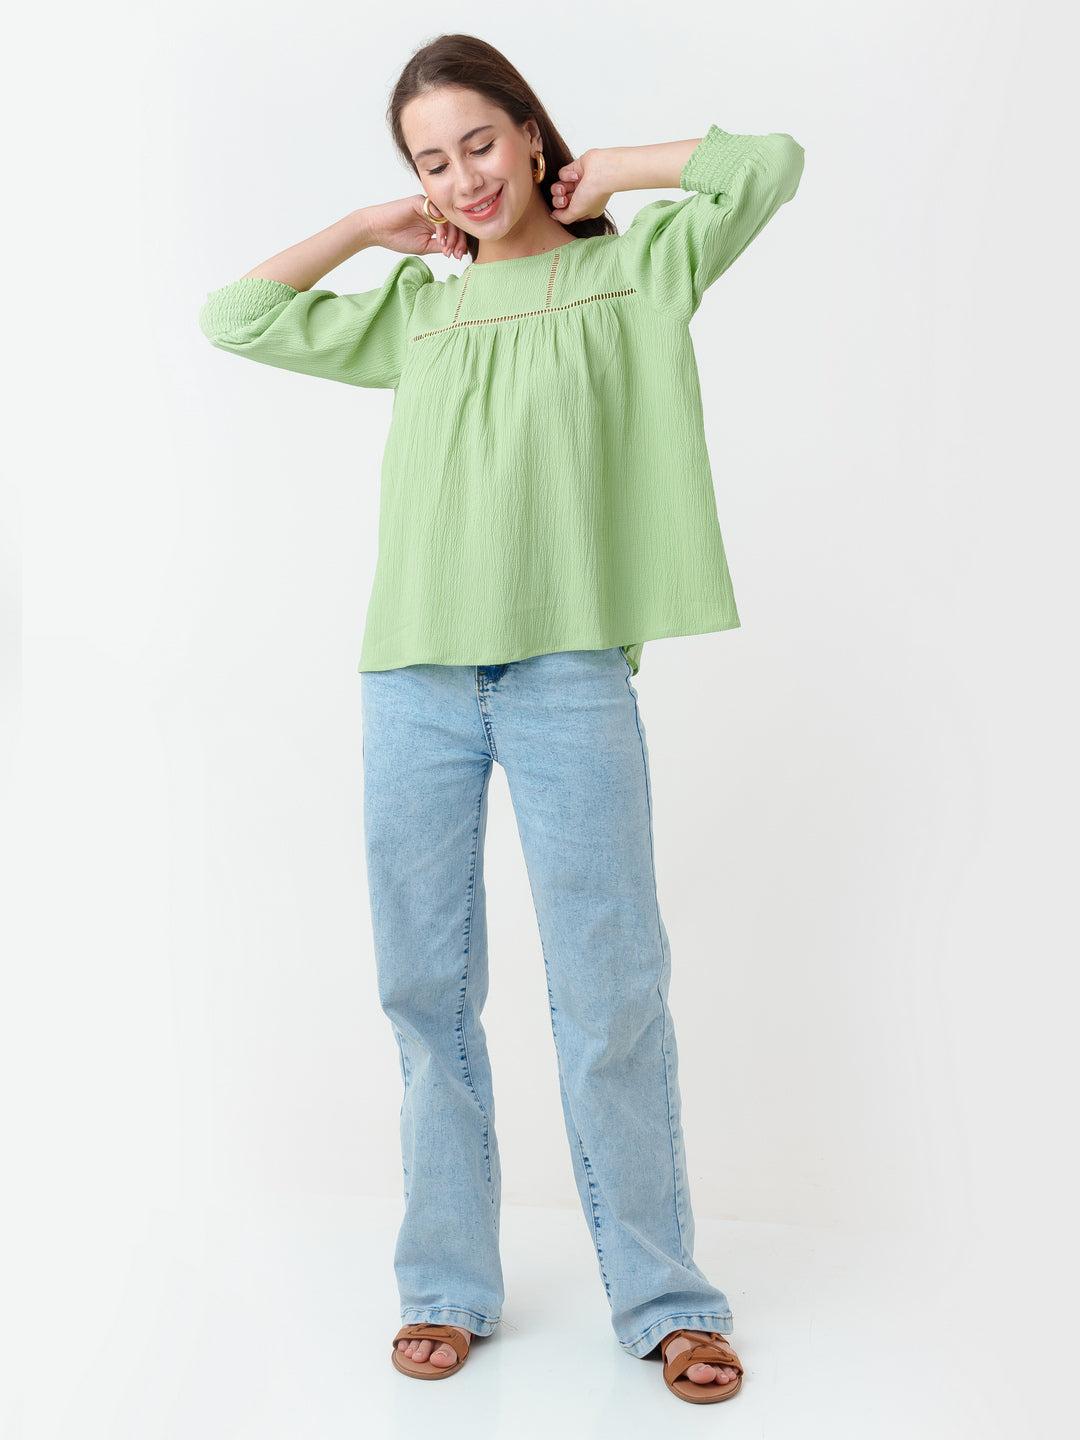 Green Textured Regular Top For Women By Zink London